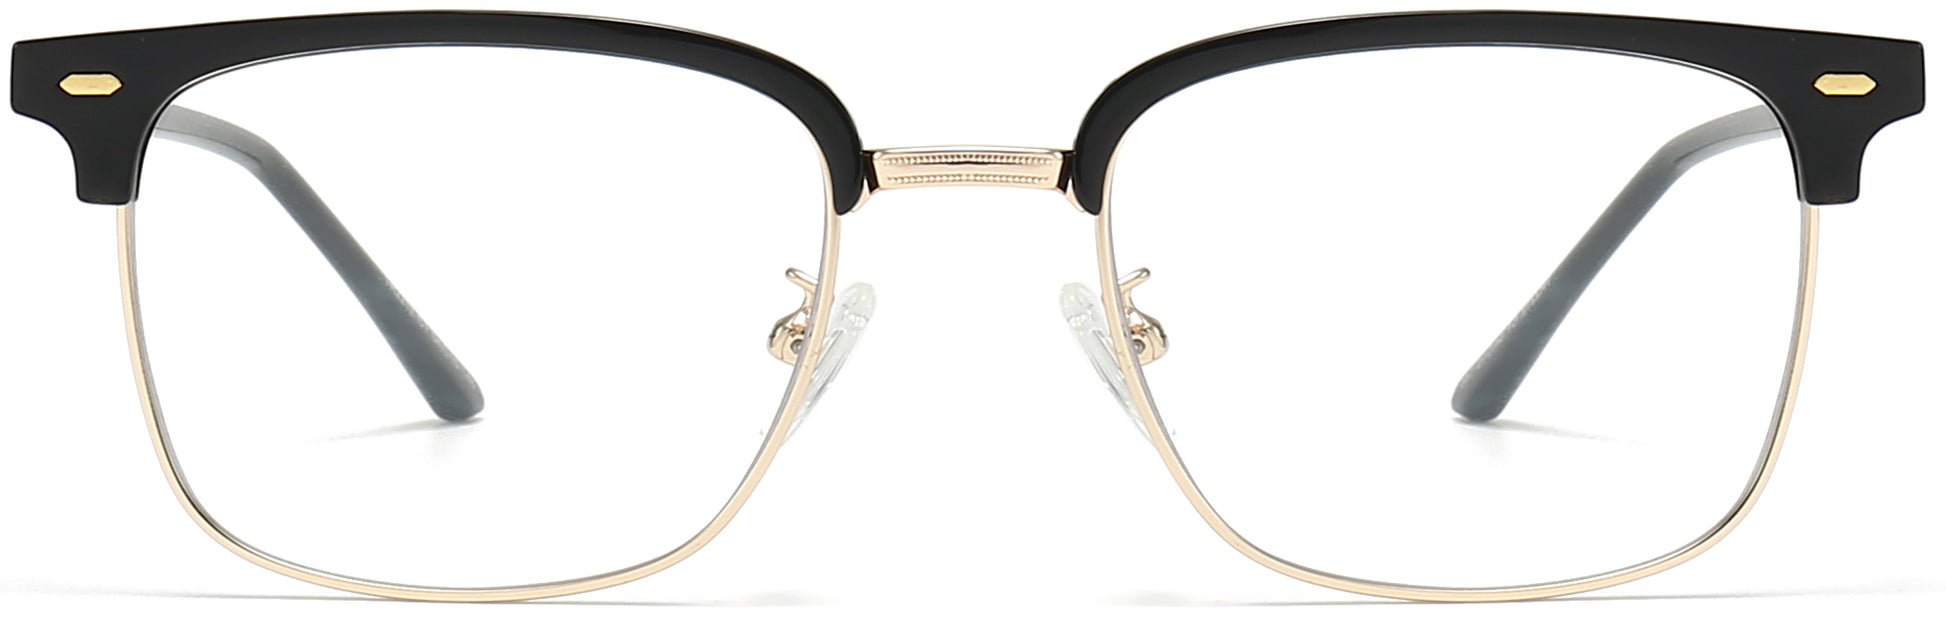 Aaron Browline Black Gold Eyeglasses from ANRRI